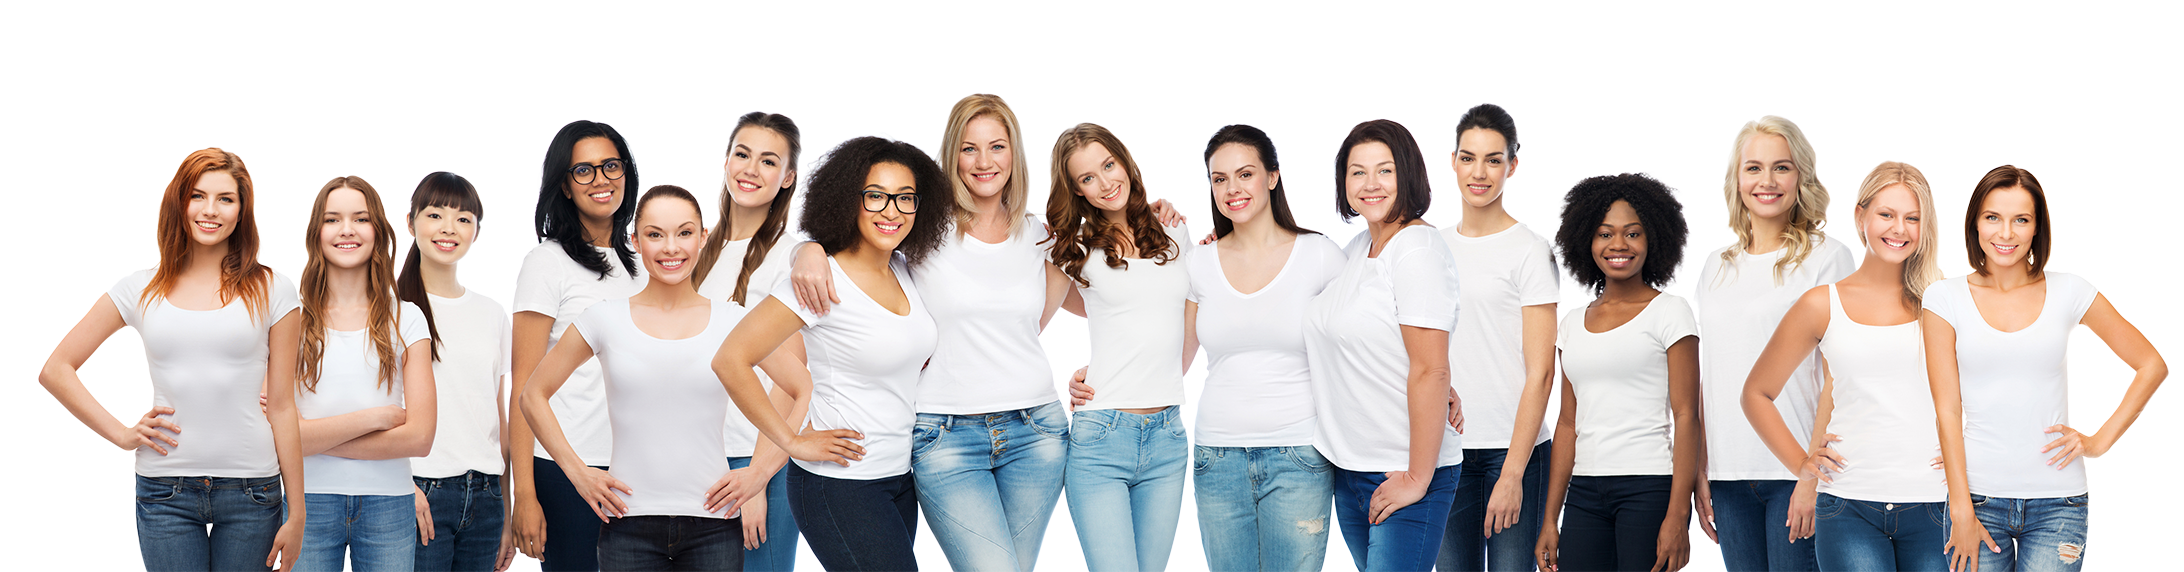 Diverse Women In T-shirts - Women Diversity Body Size (2184x572)